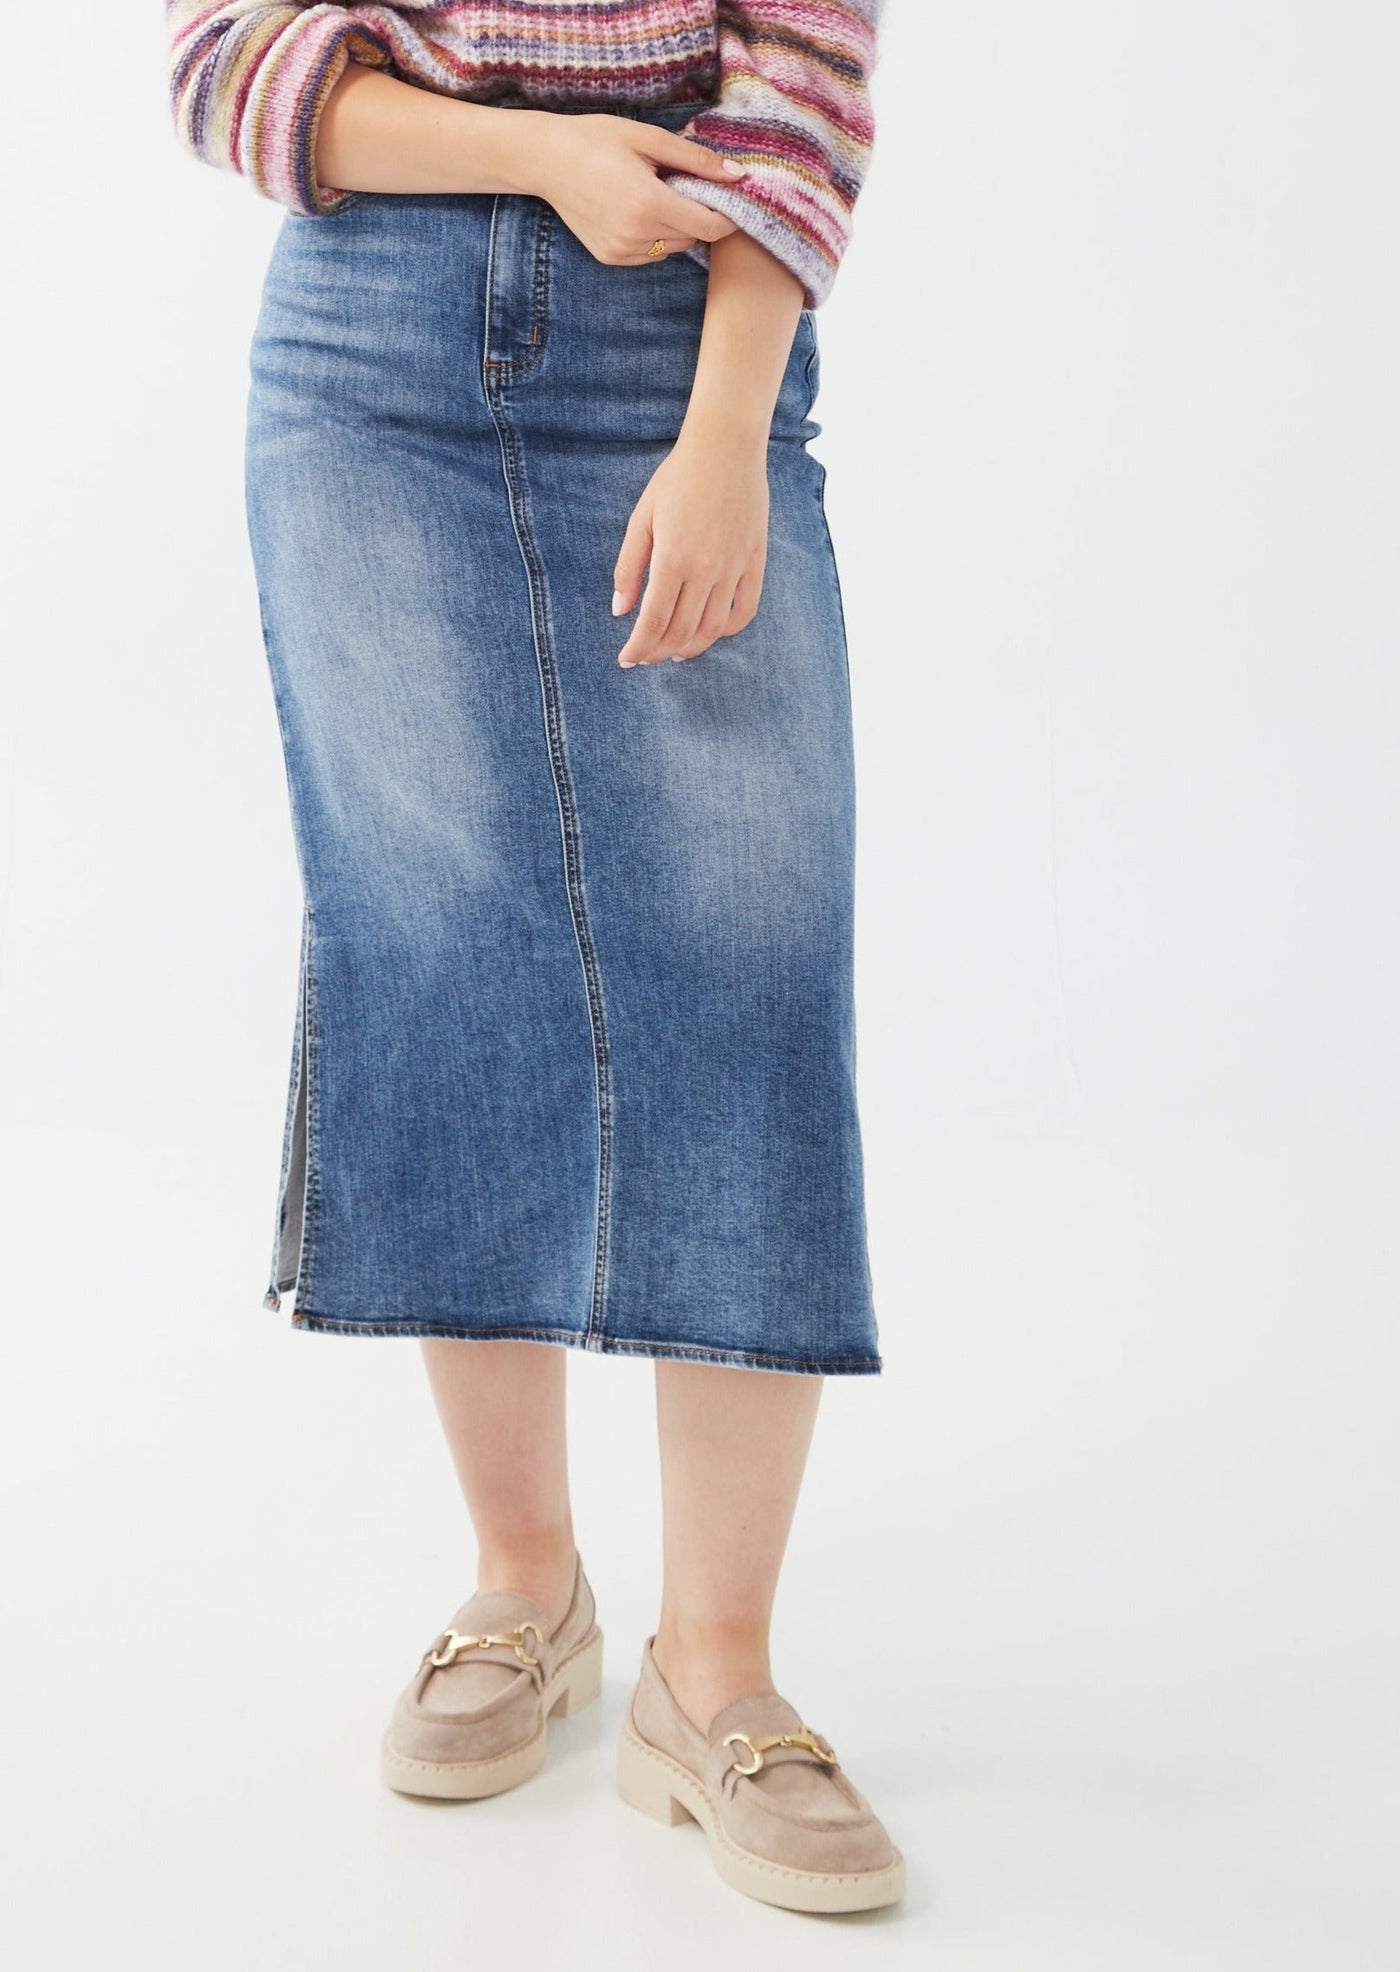 French Dressing Jeans - Long Jean Skirt